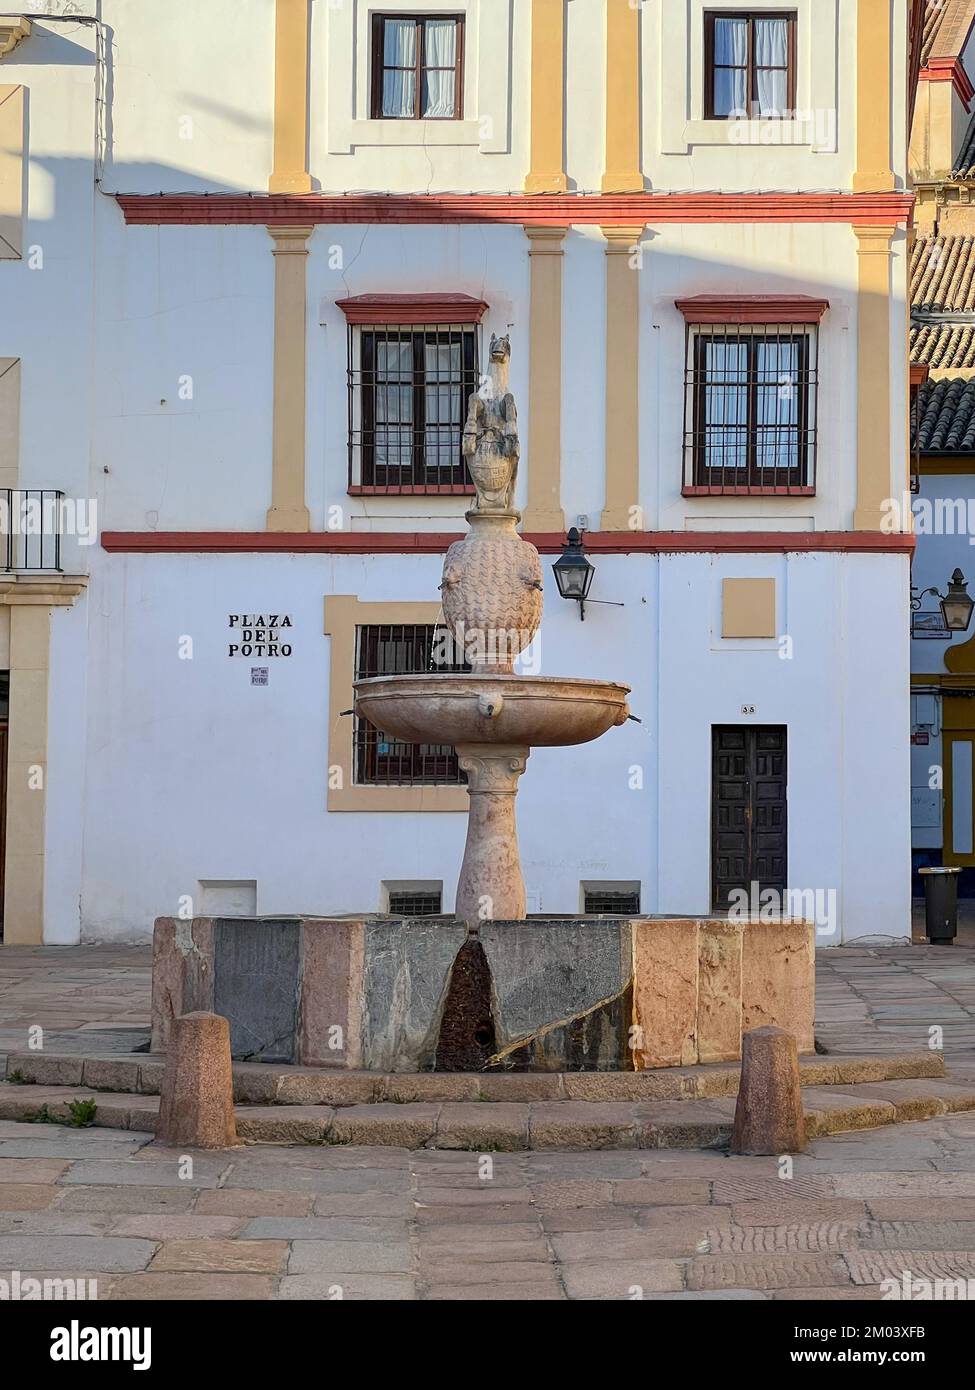 Cordoba, Spain - Nov 28, 2021: Plaza del Potro is a square in the historic center of Cordoba, Spain, and dates back to the XVI century. Stock Photo